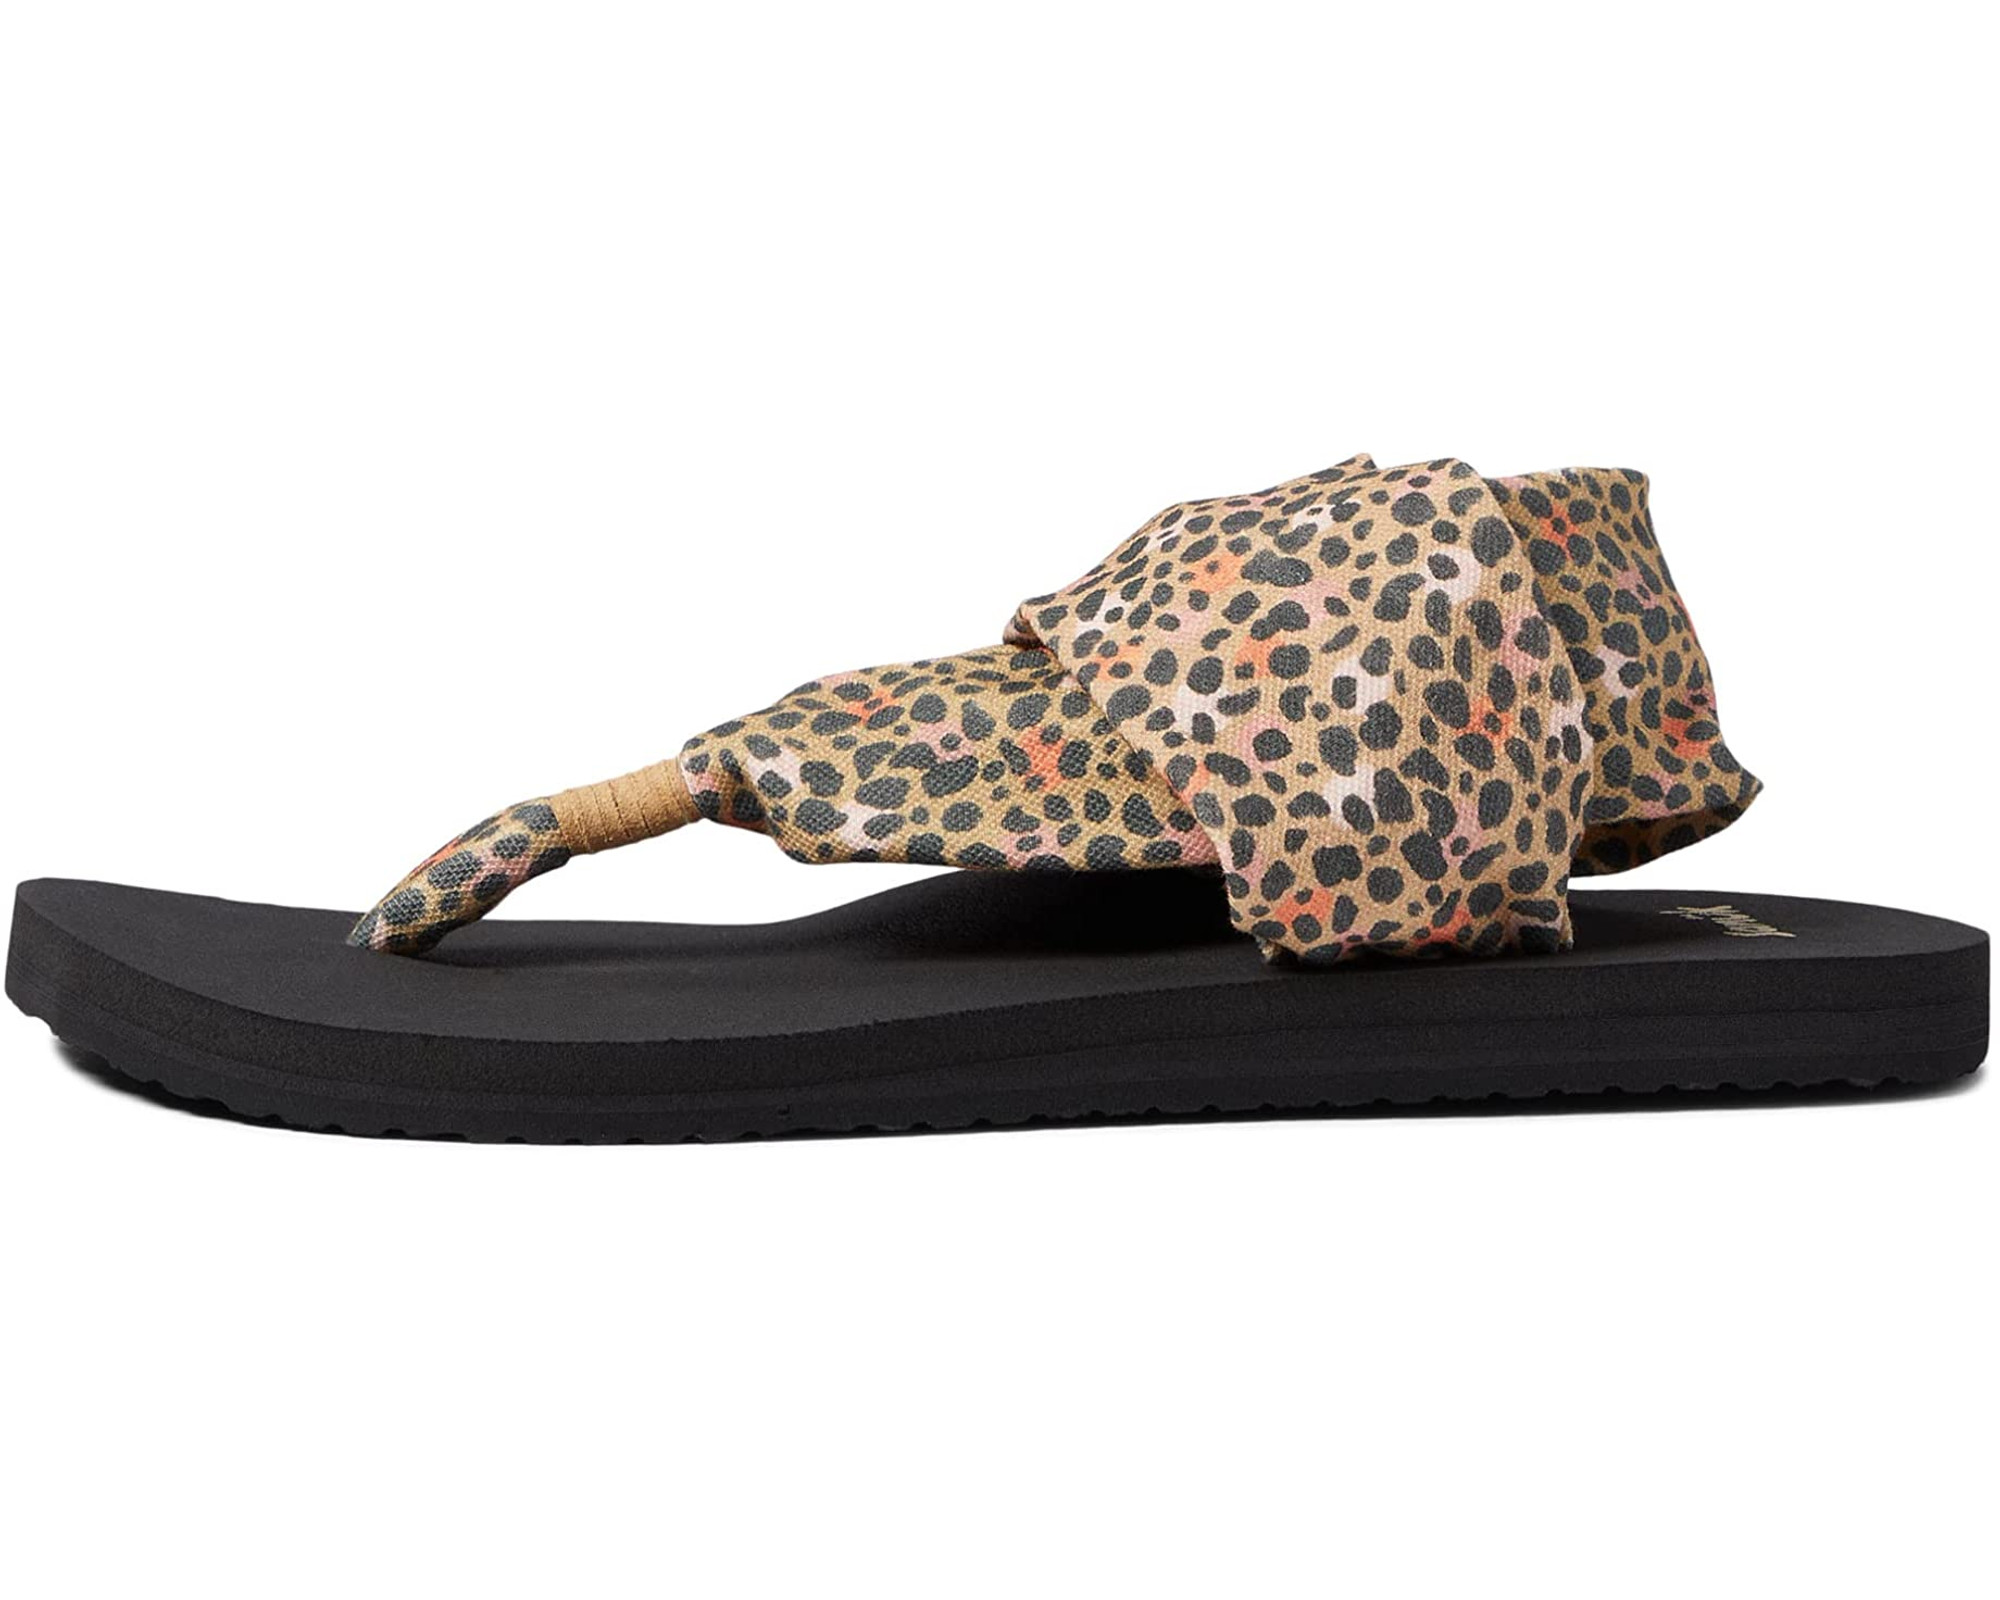 Yoga Sling 2 Cheetah Sandal